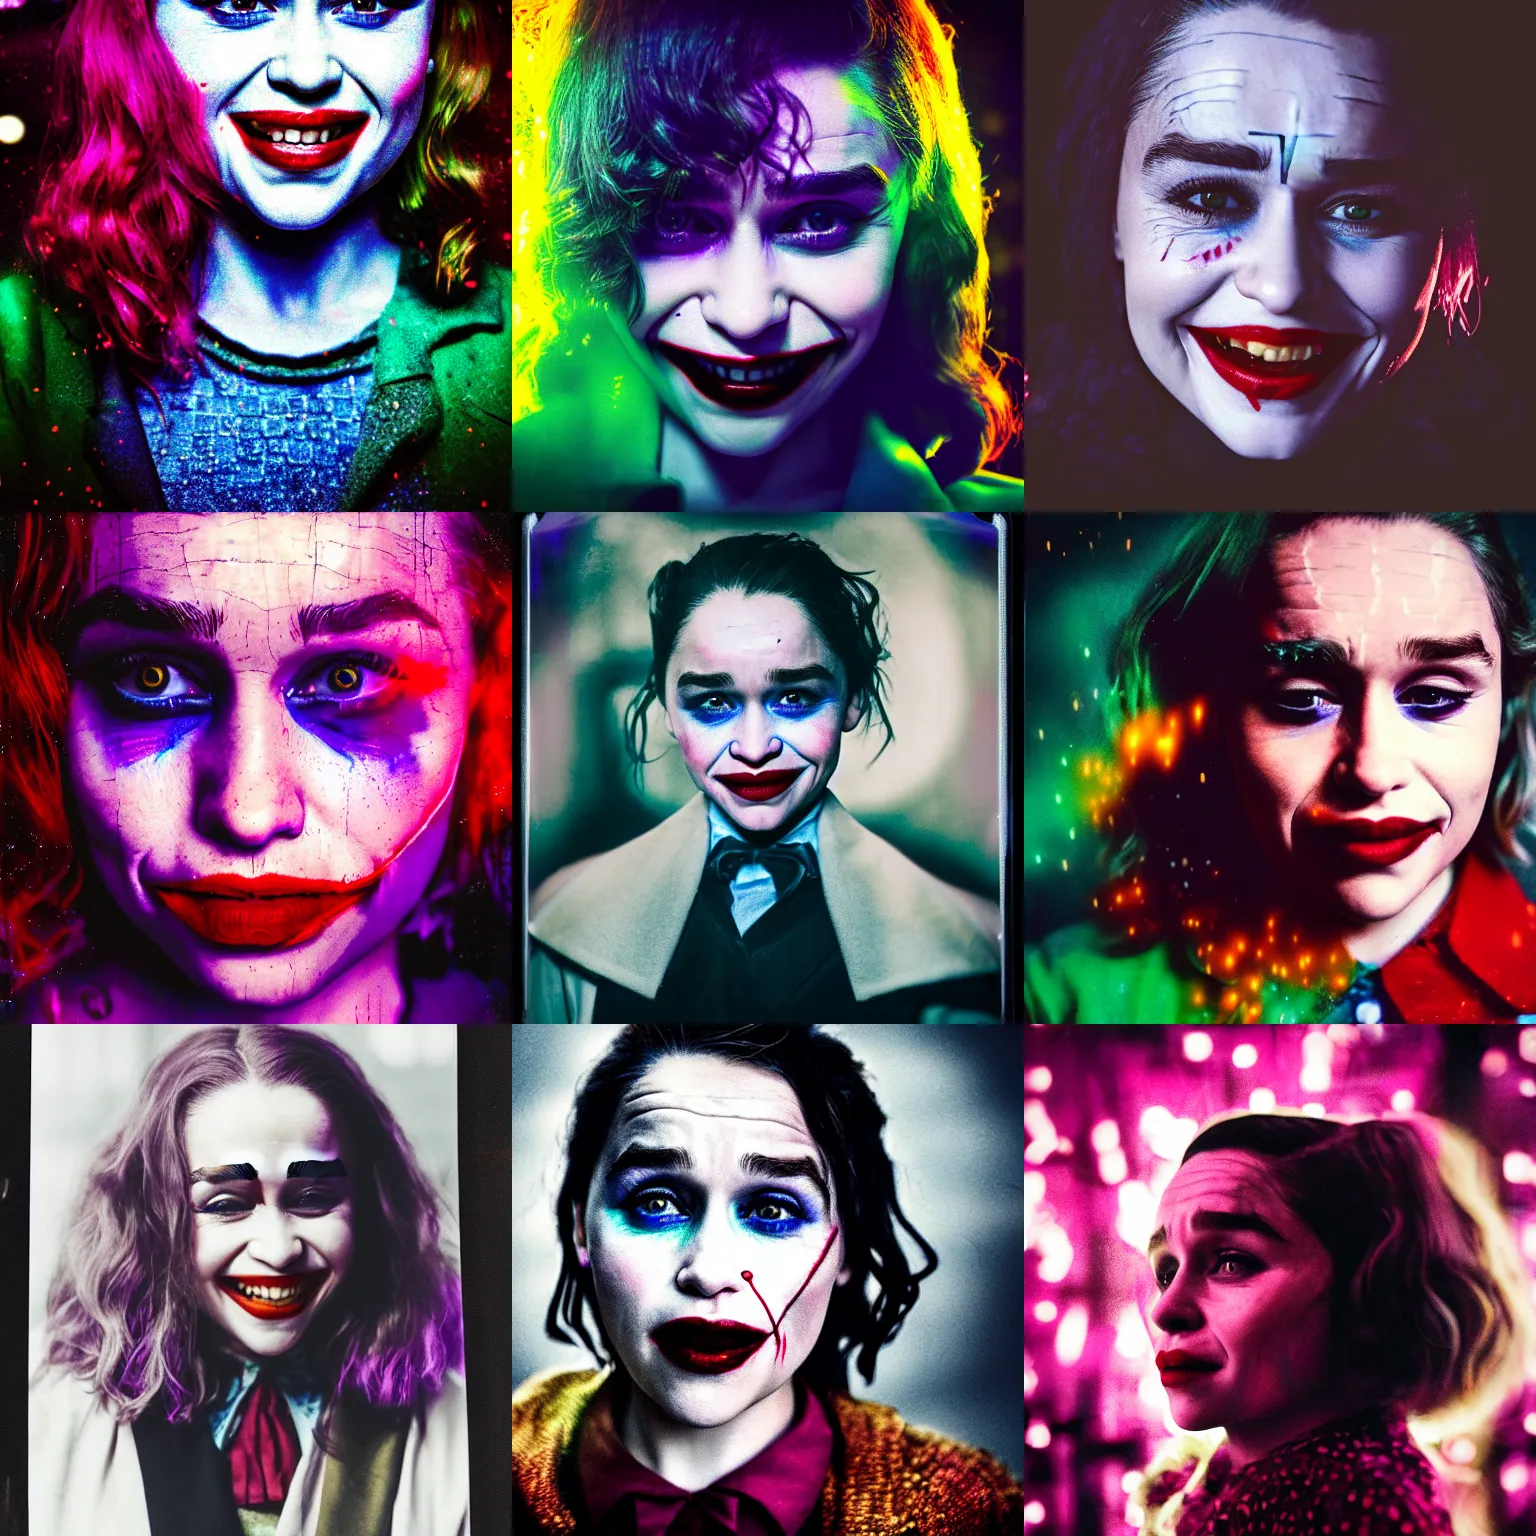 Prompt: Emilia Clarke as the joker, polaroid photograph, 4k, by Brandon Woelfel